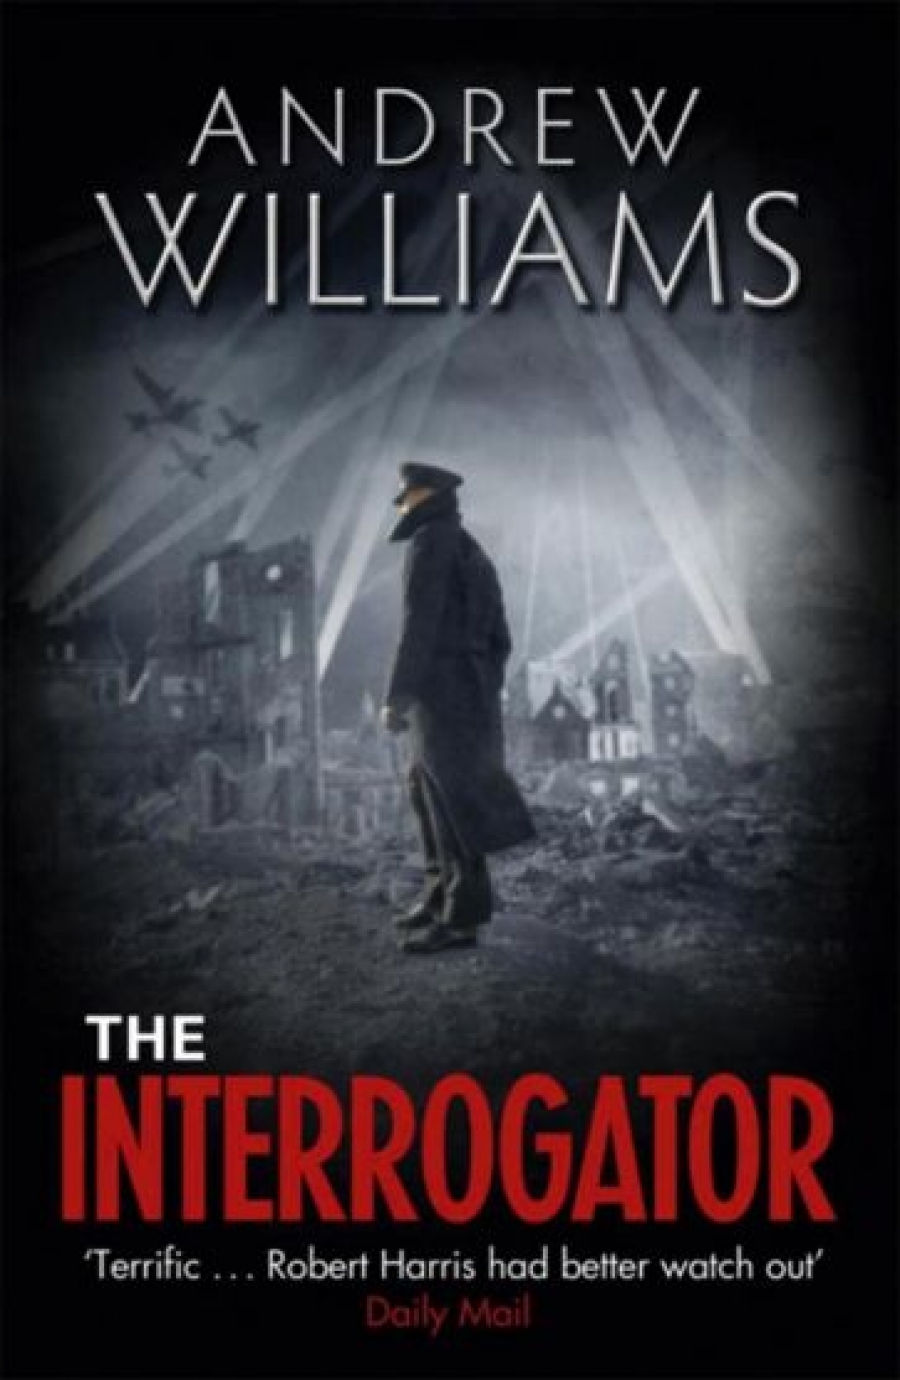 Andrew Williams The interrogator 